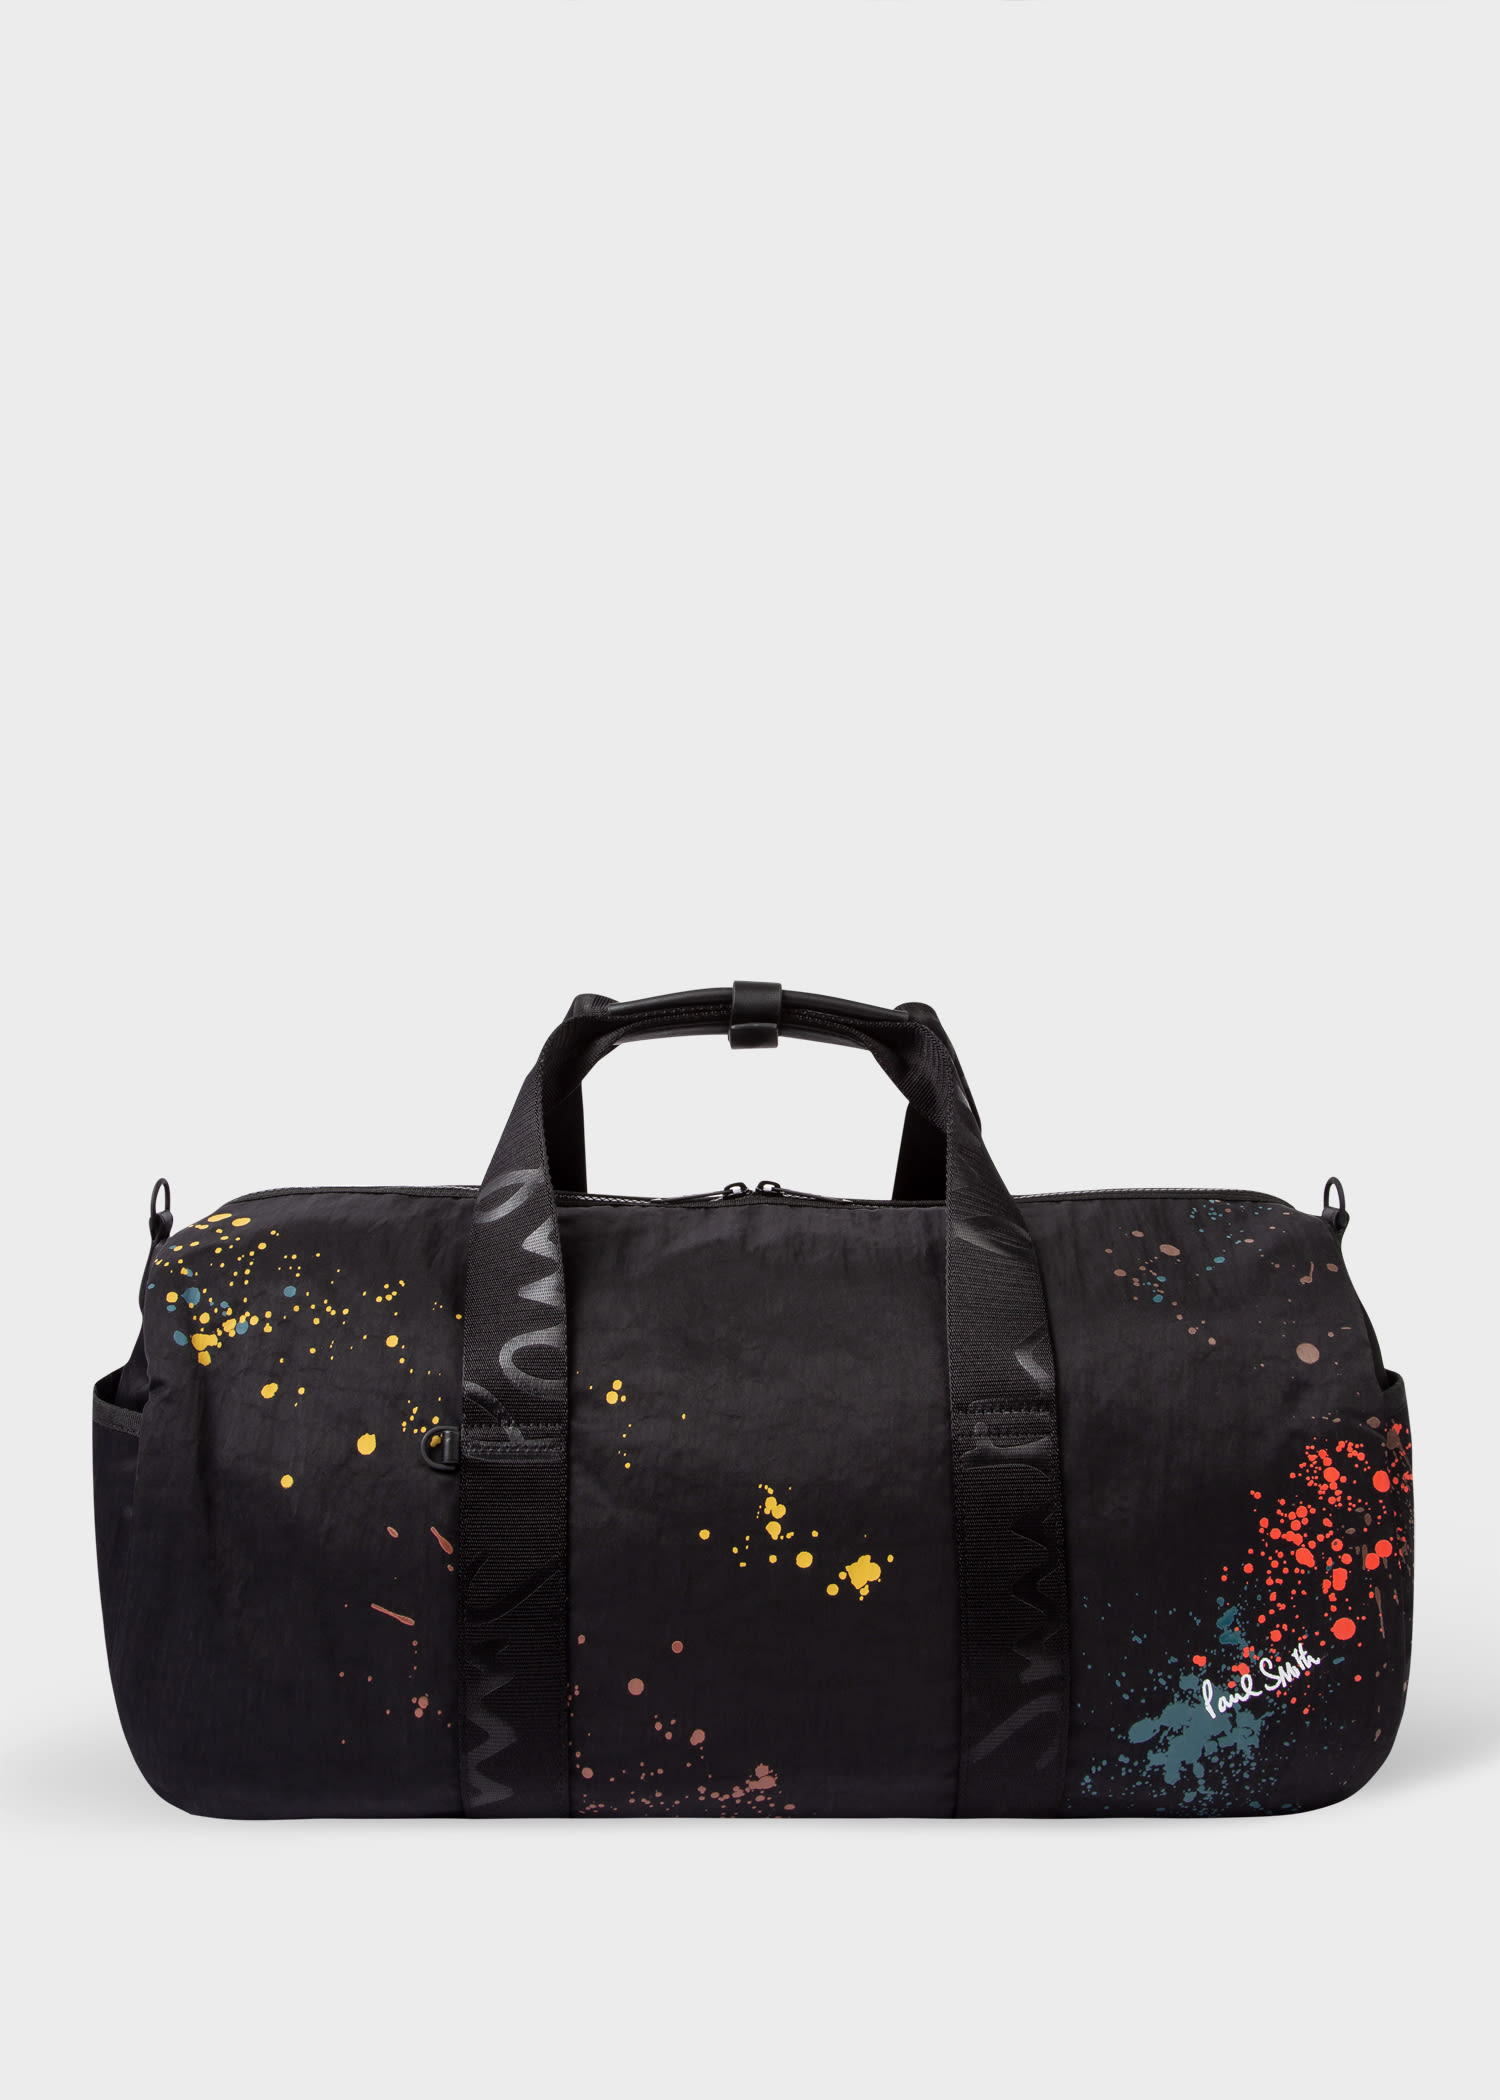 Black "Paint Splatter" Duffle Bag